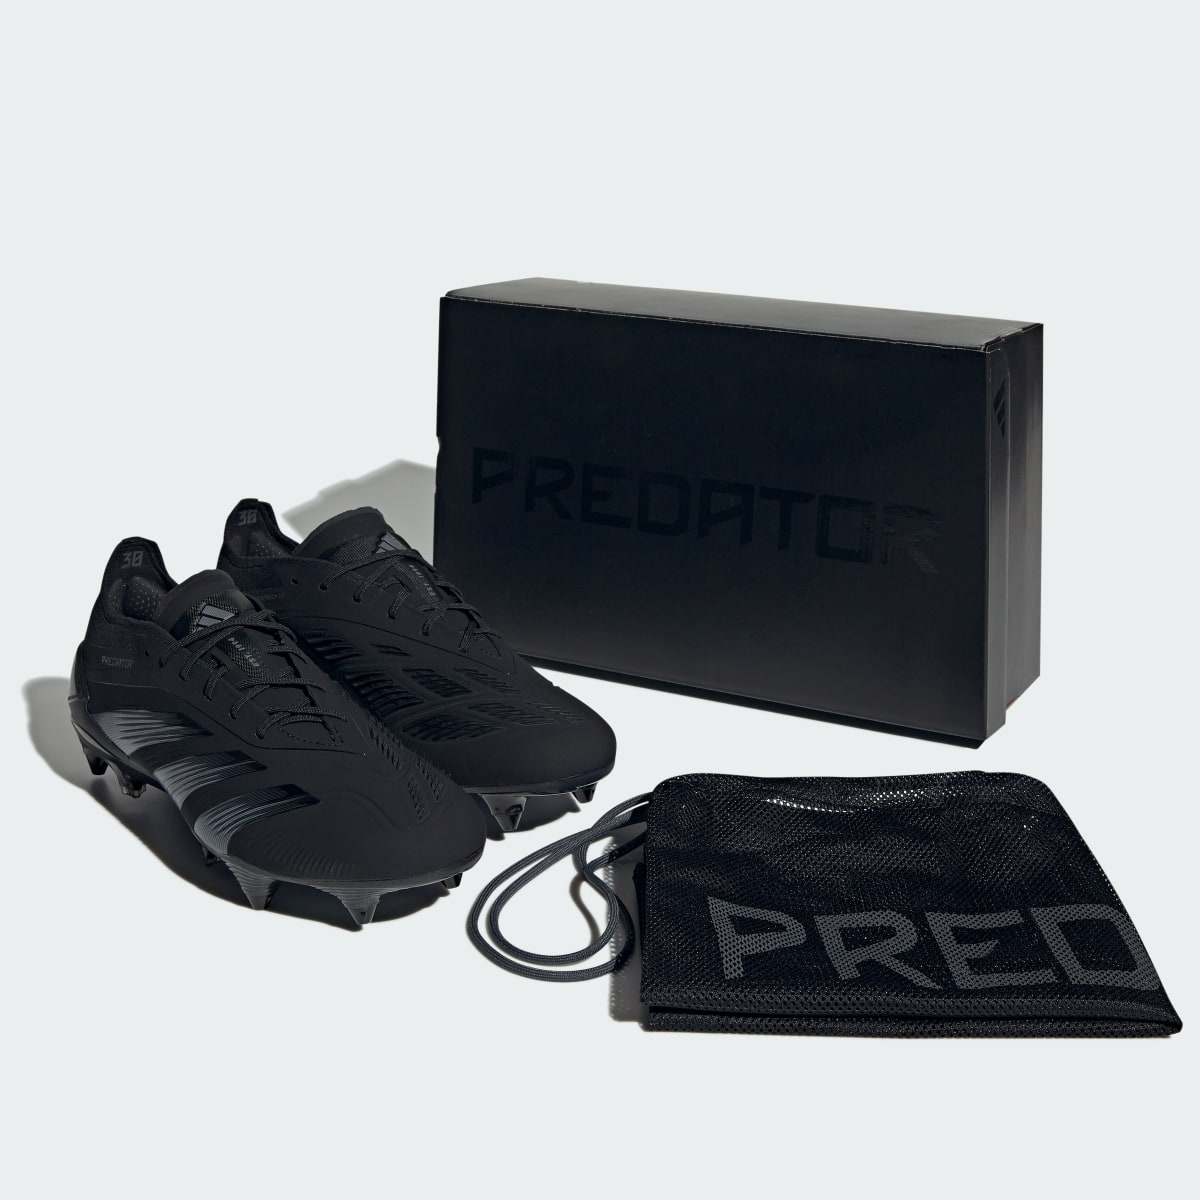 Adidas Predator Elite Soft Ground Football Boots. 10